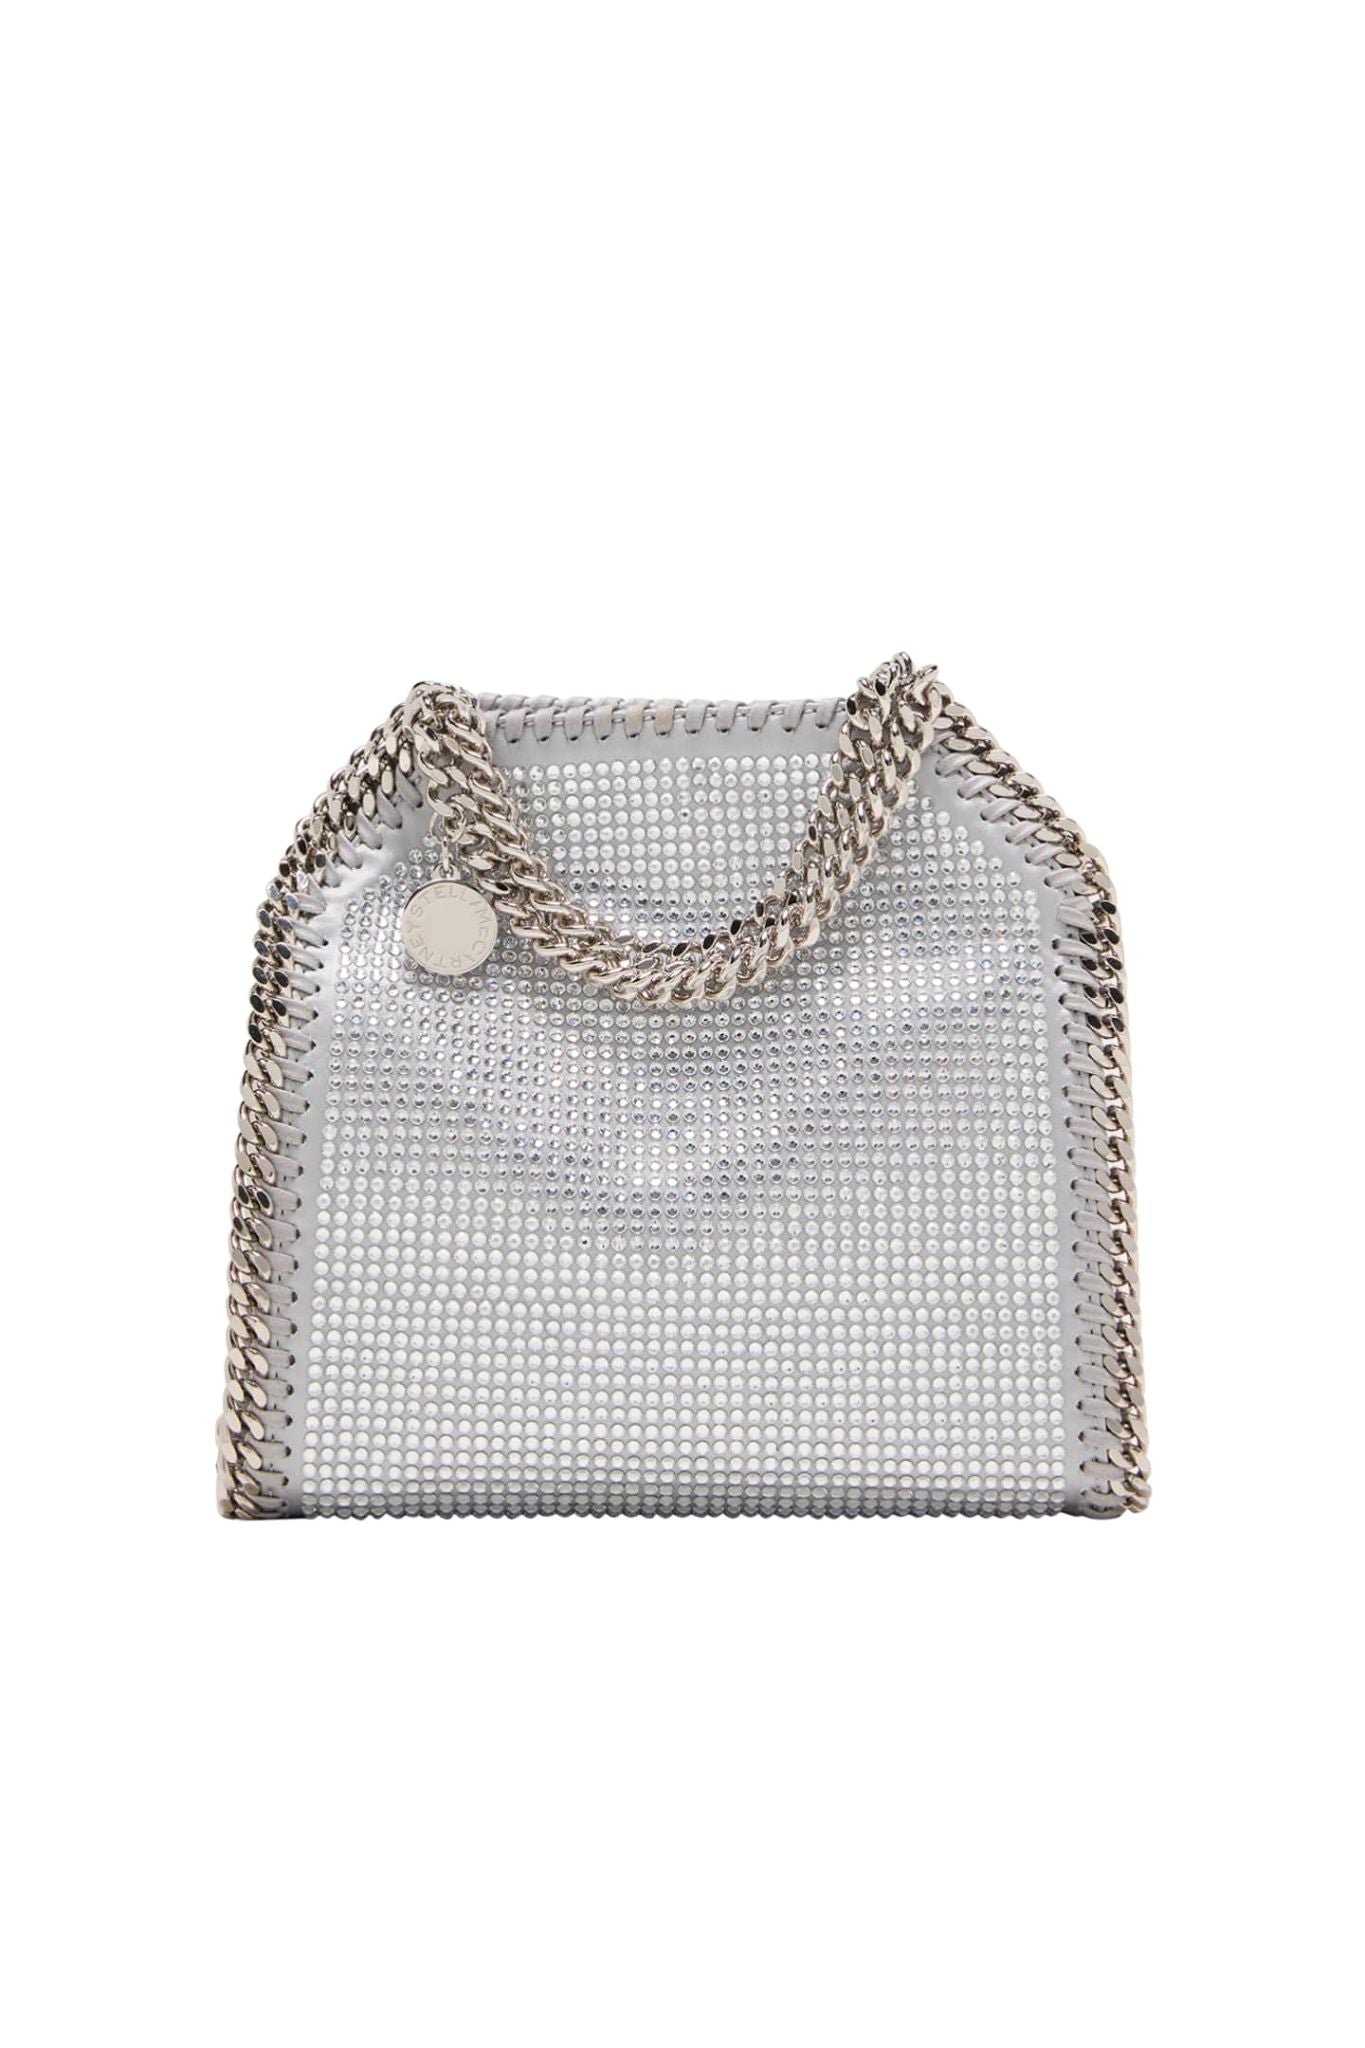 Stella McCartney Falabella Tiny Eco Crystal Tote Bag